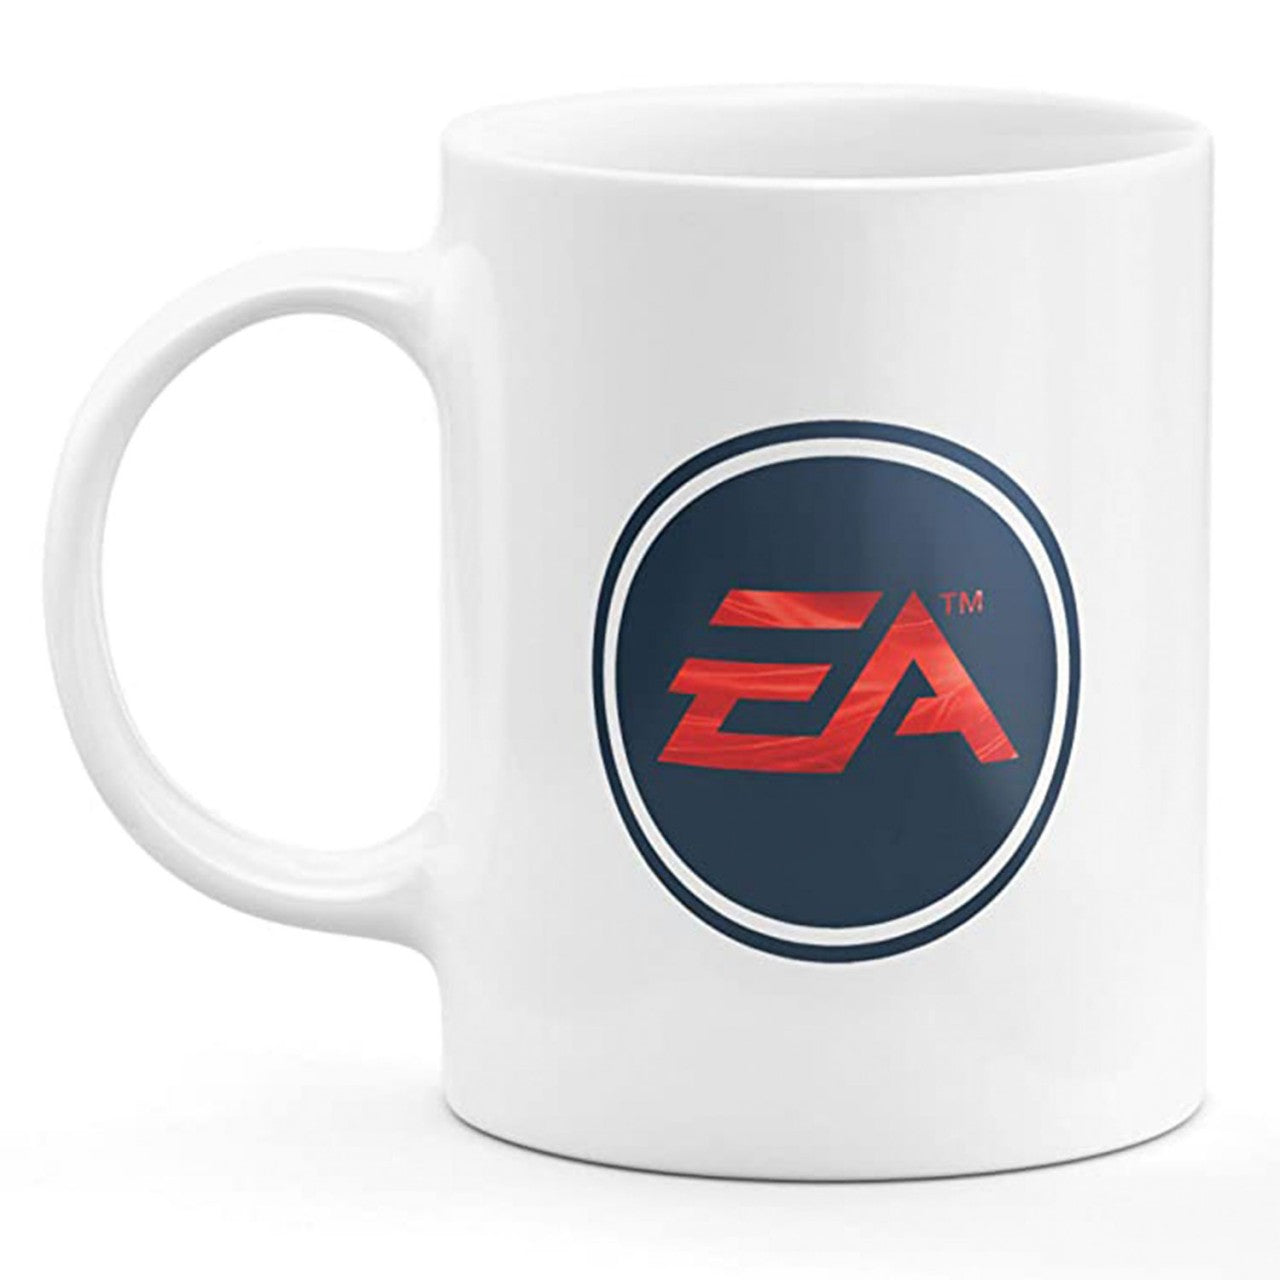 Personalized Coffee Mugs With Company Logo